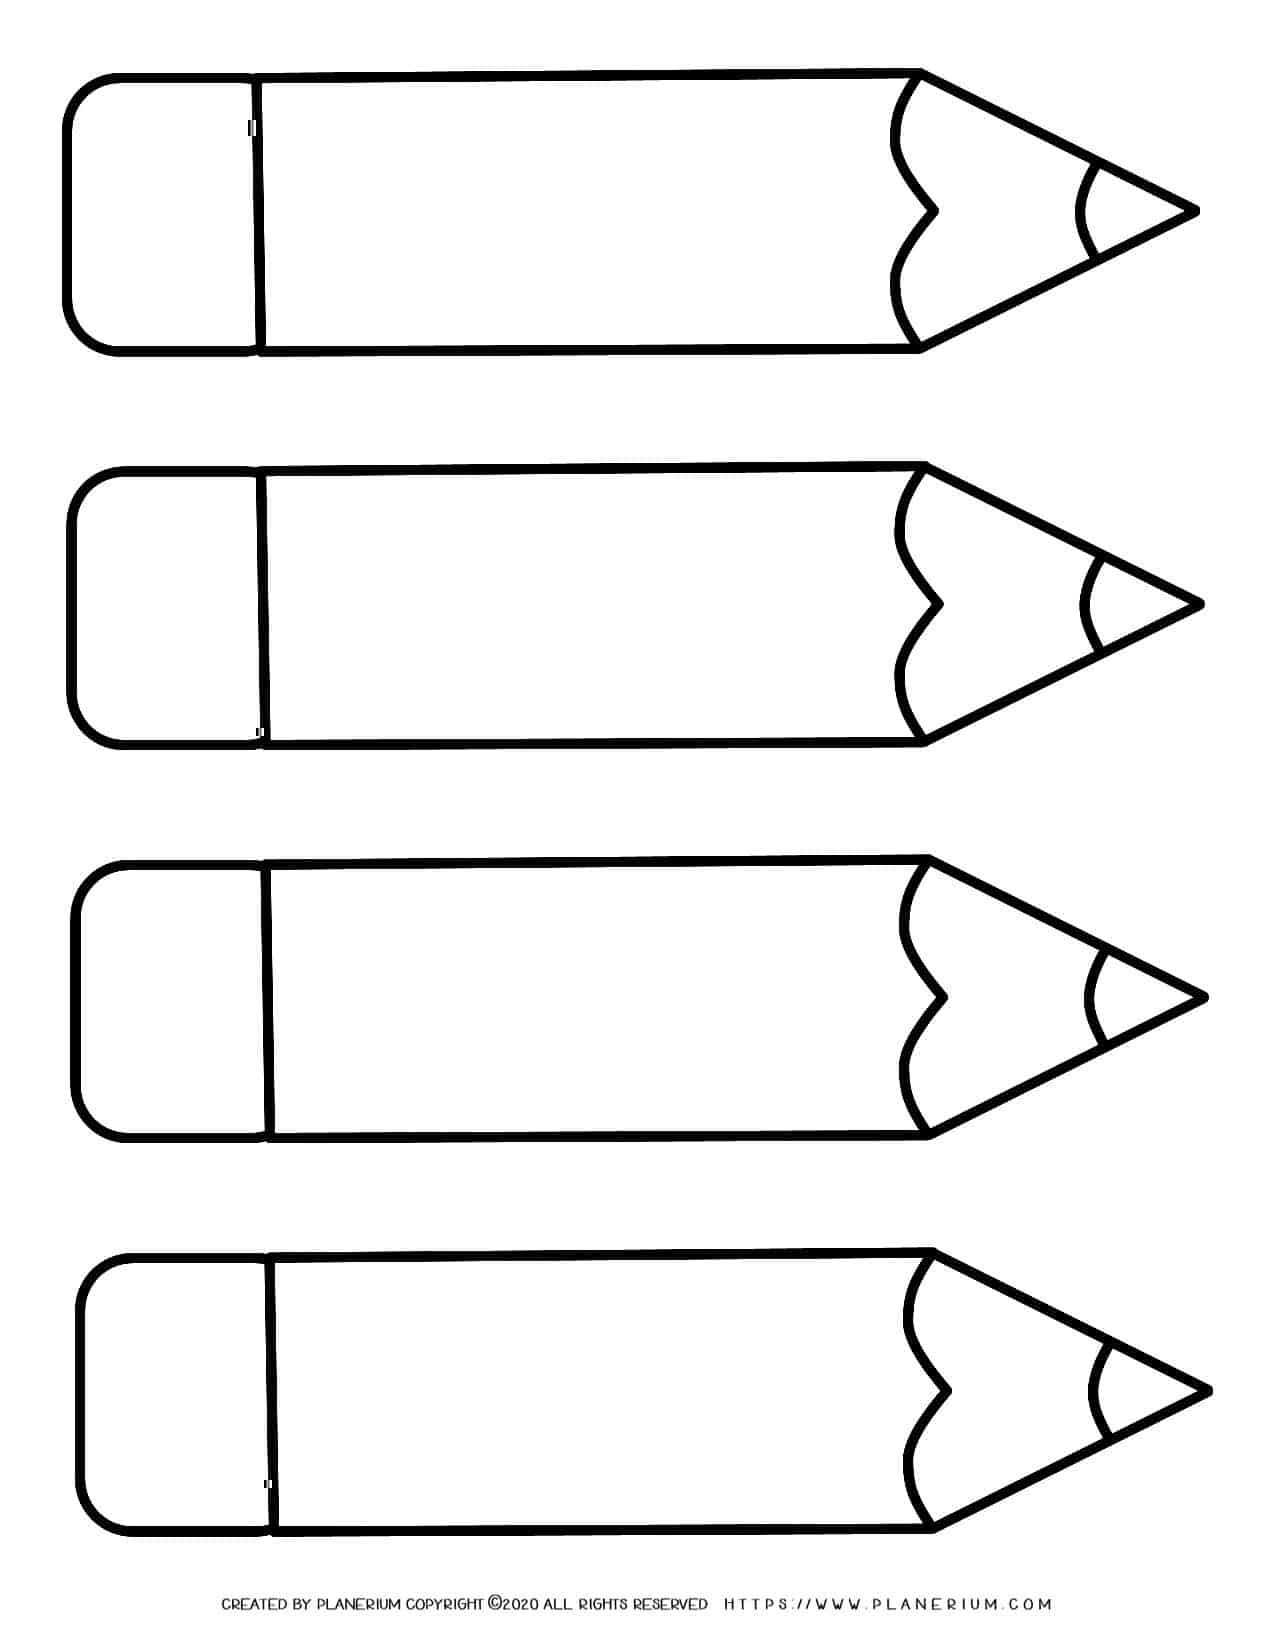 Four Pencils Template | Planerium